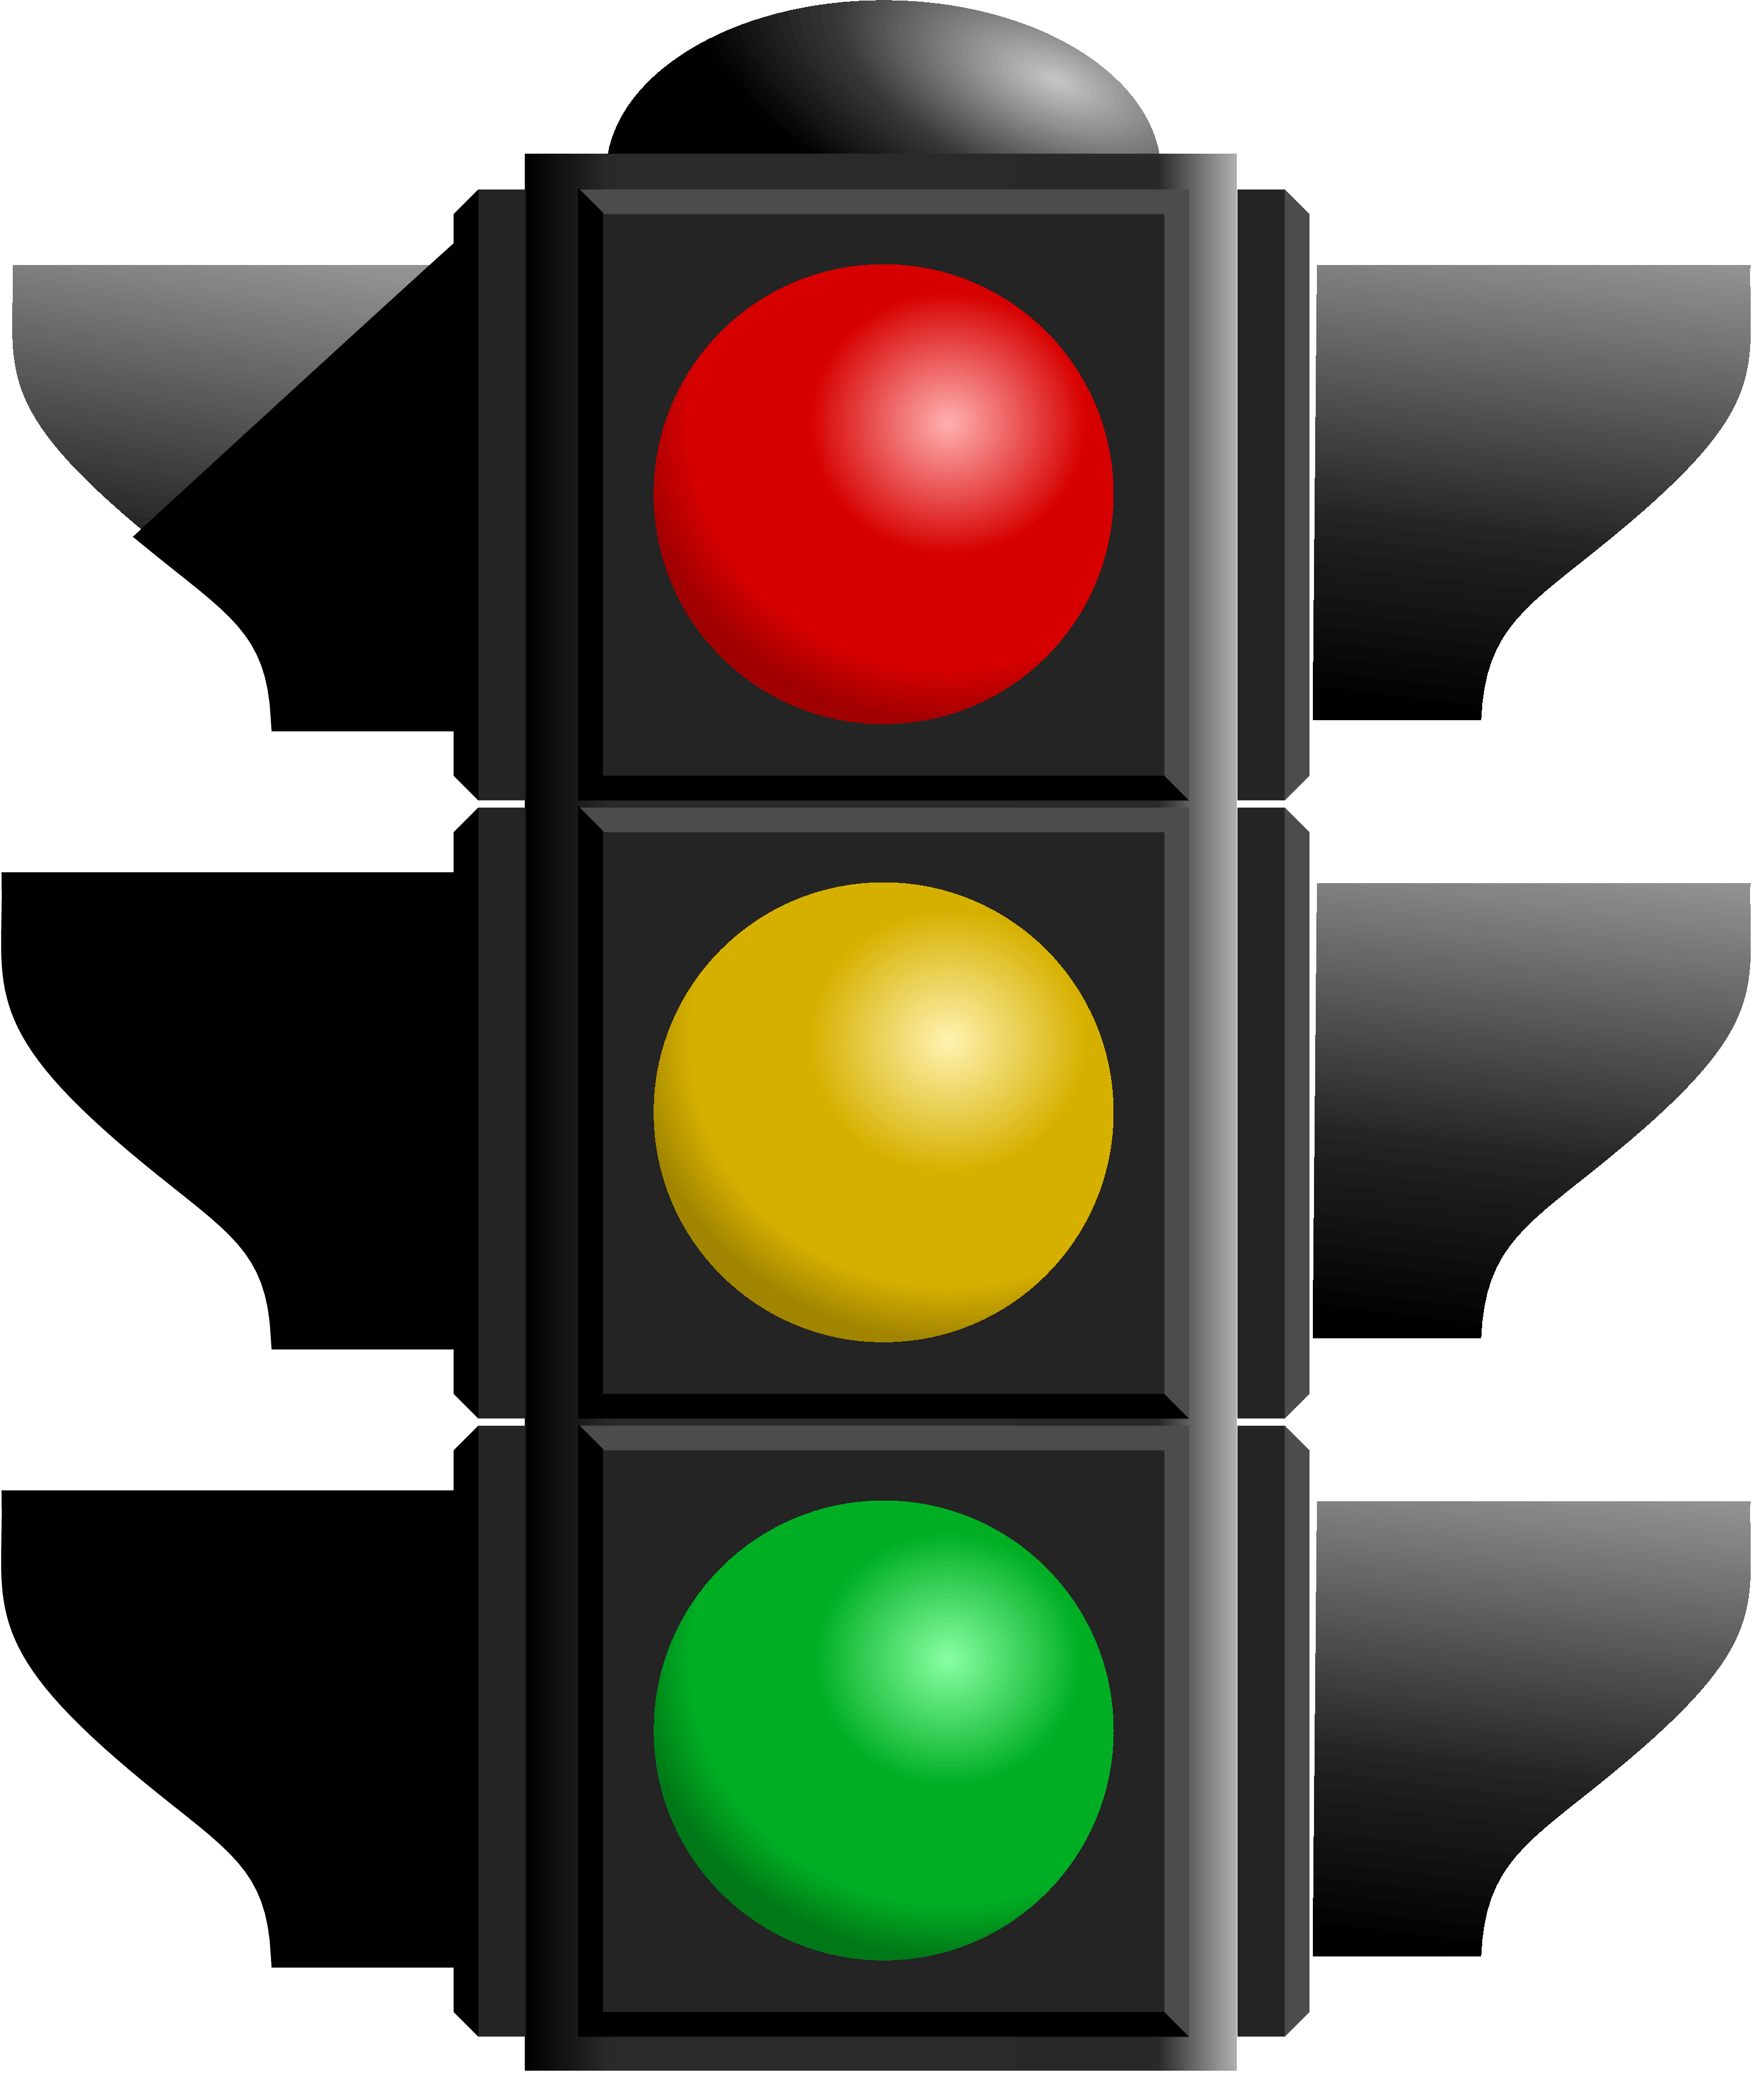 Traffic Light PNG in Transparent - Traffic Light Png